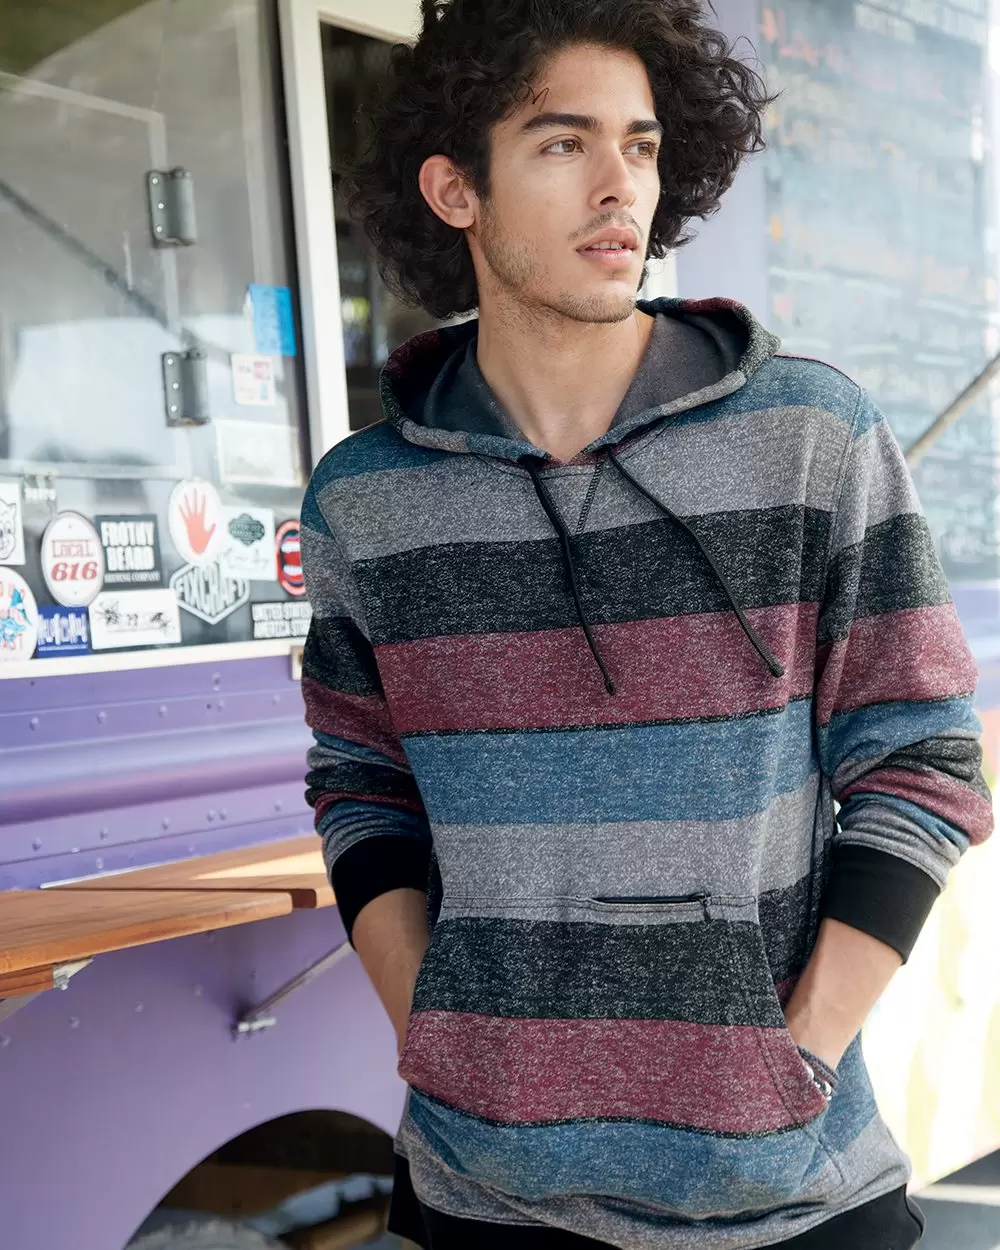 B8603 Burnside - Printed Striped Fleece Sweatshirt - From $18.35